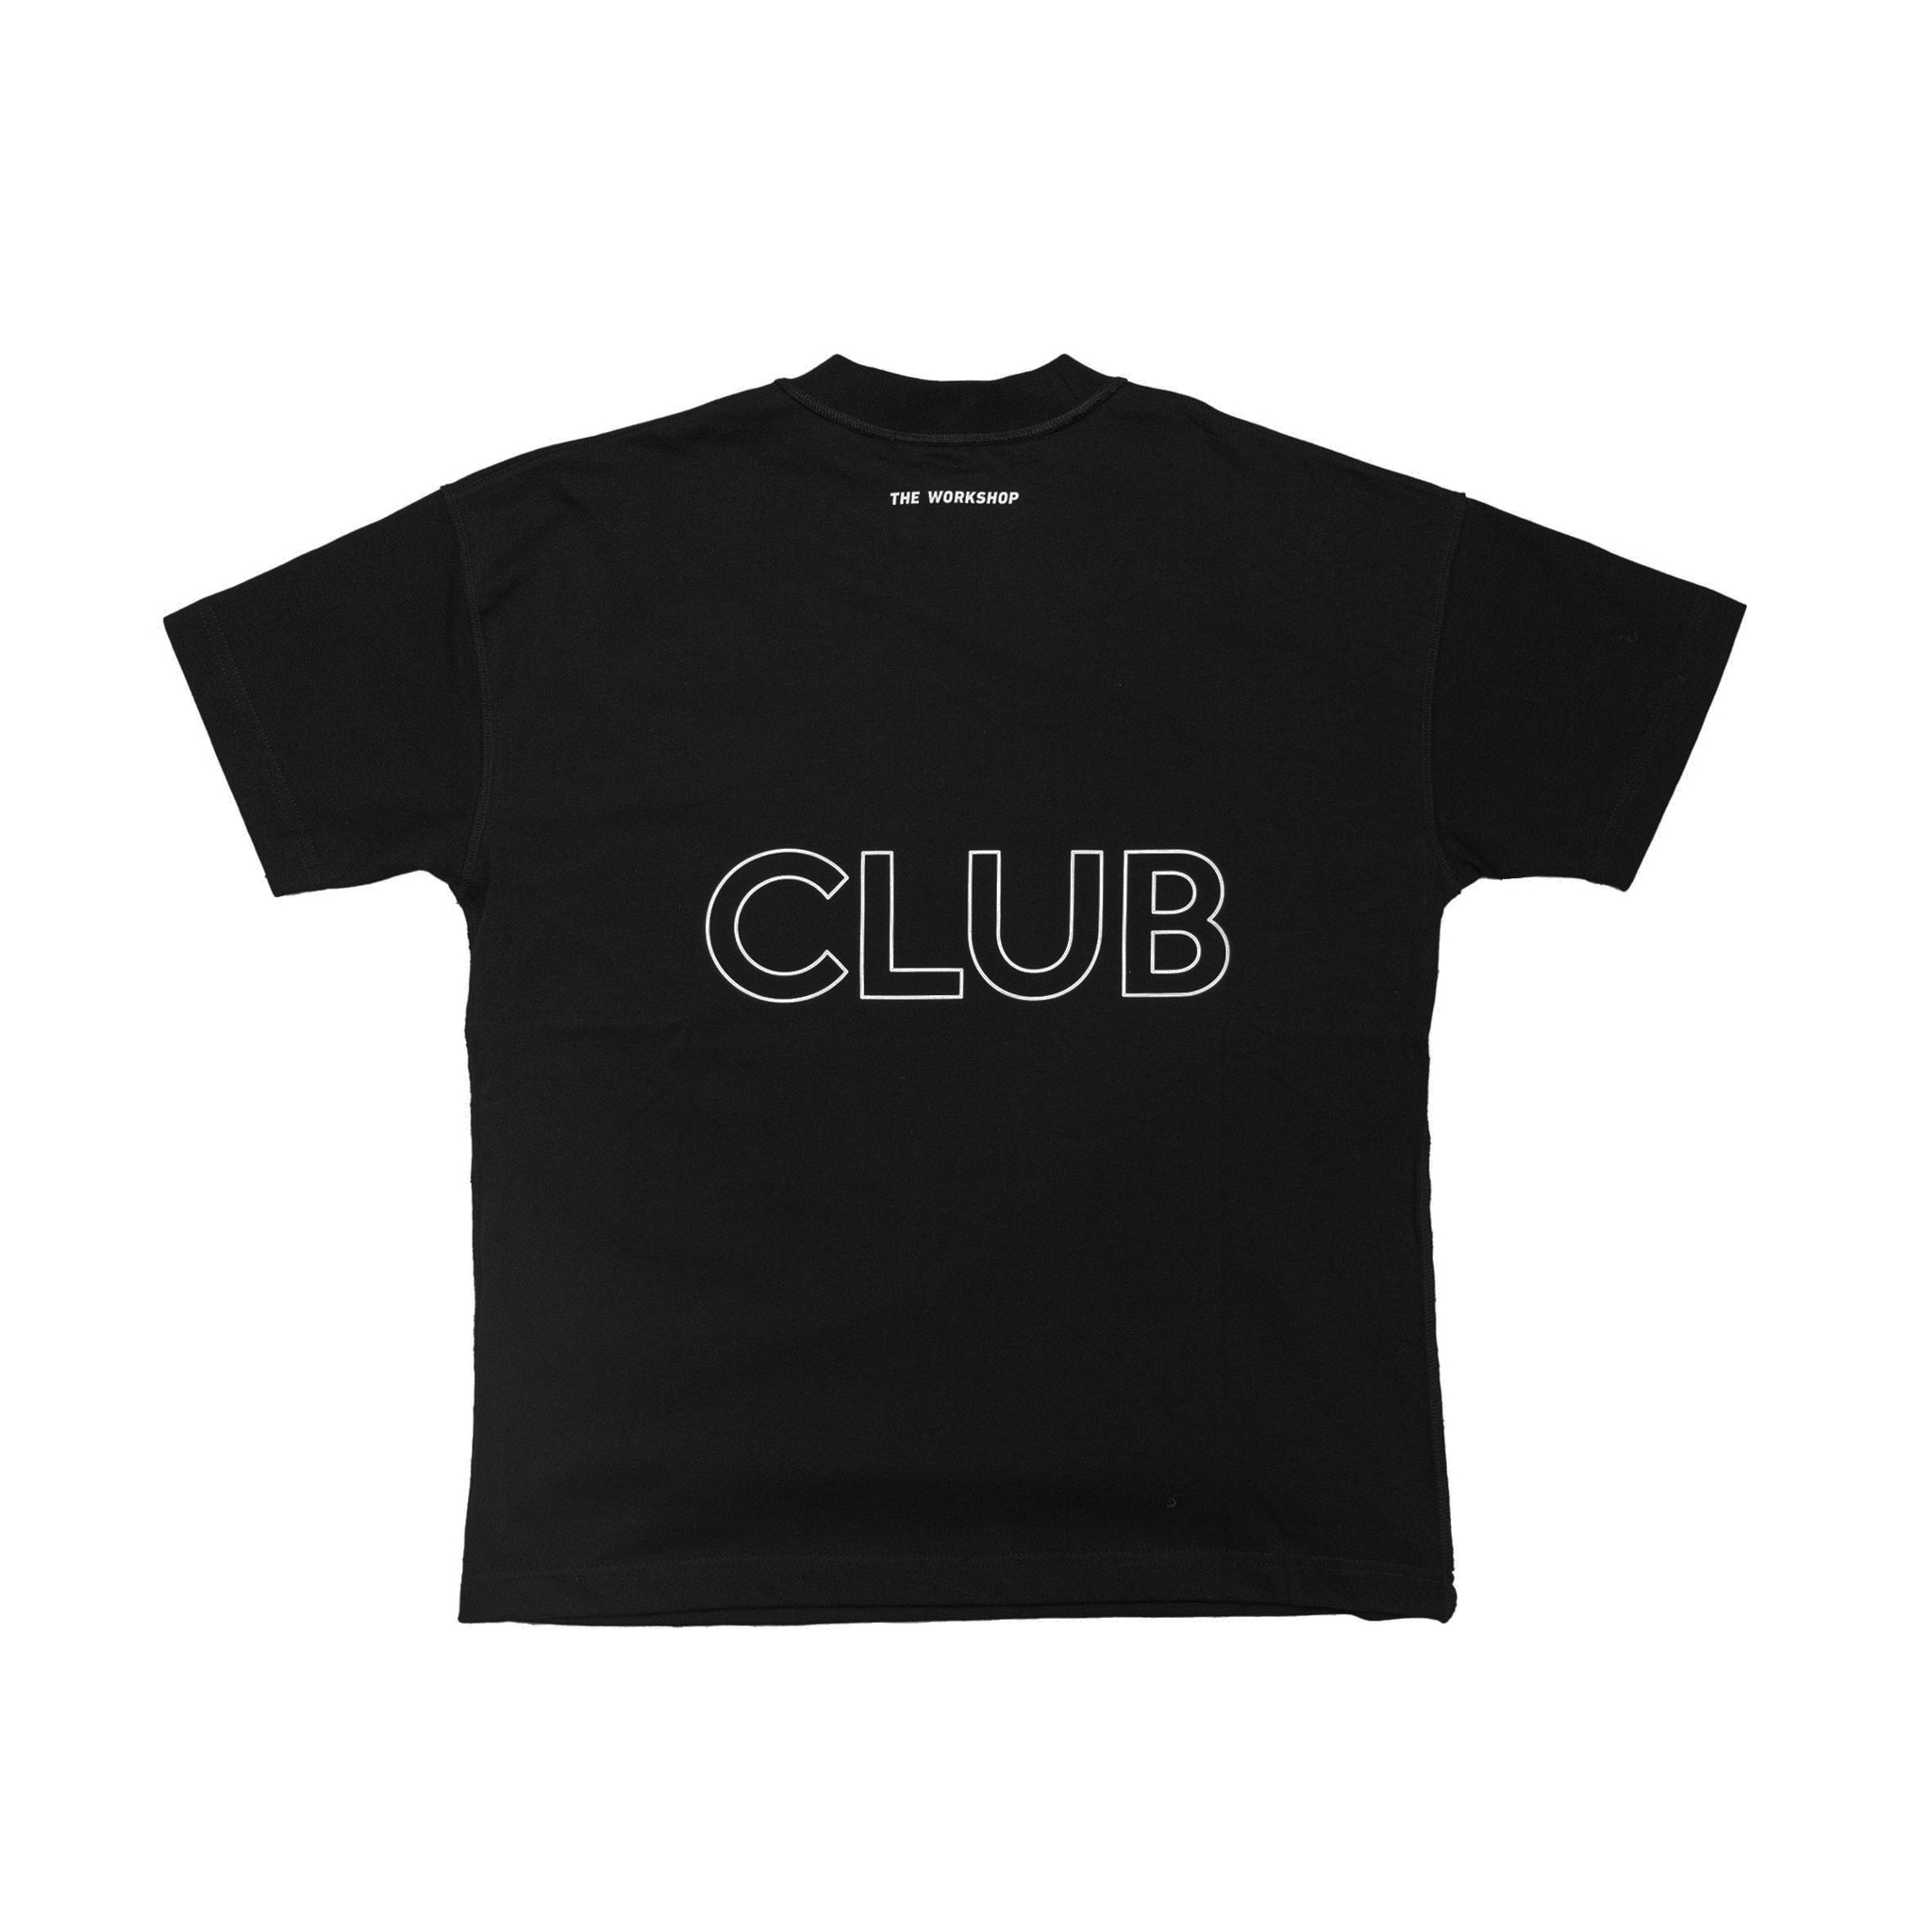 // The Techno Club T-Shirt